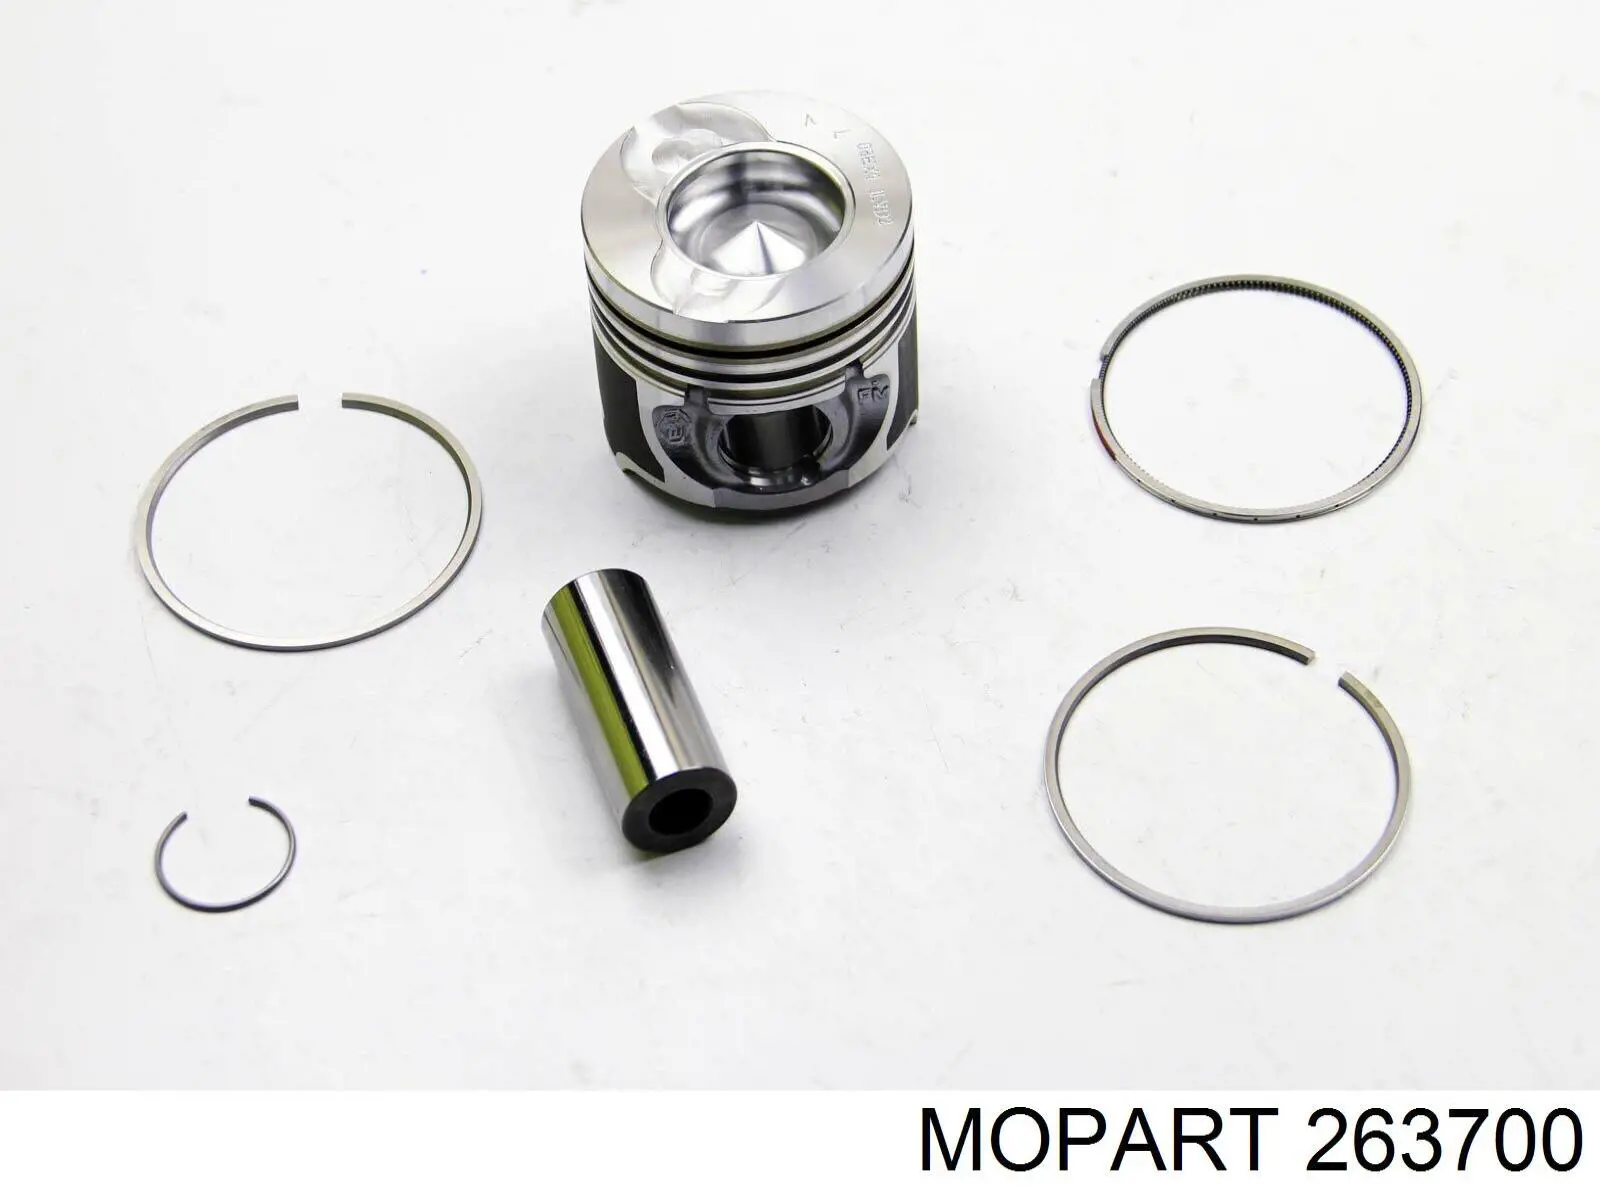 1022637000 Mopart поршень в комплекте на 1 цилиндр, std